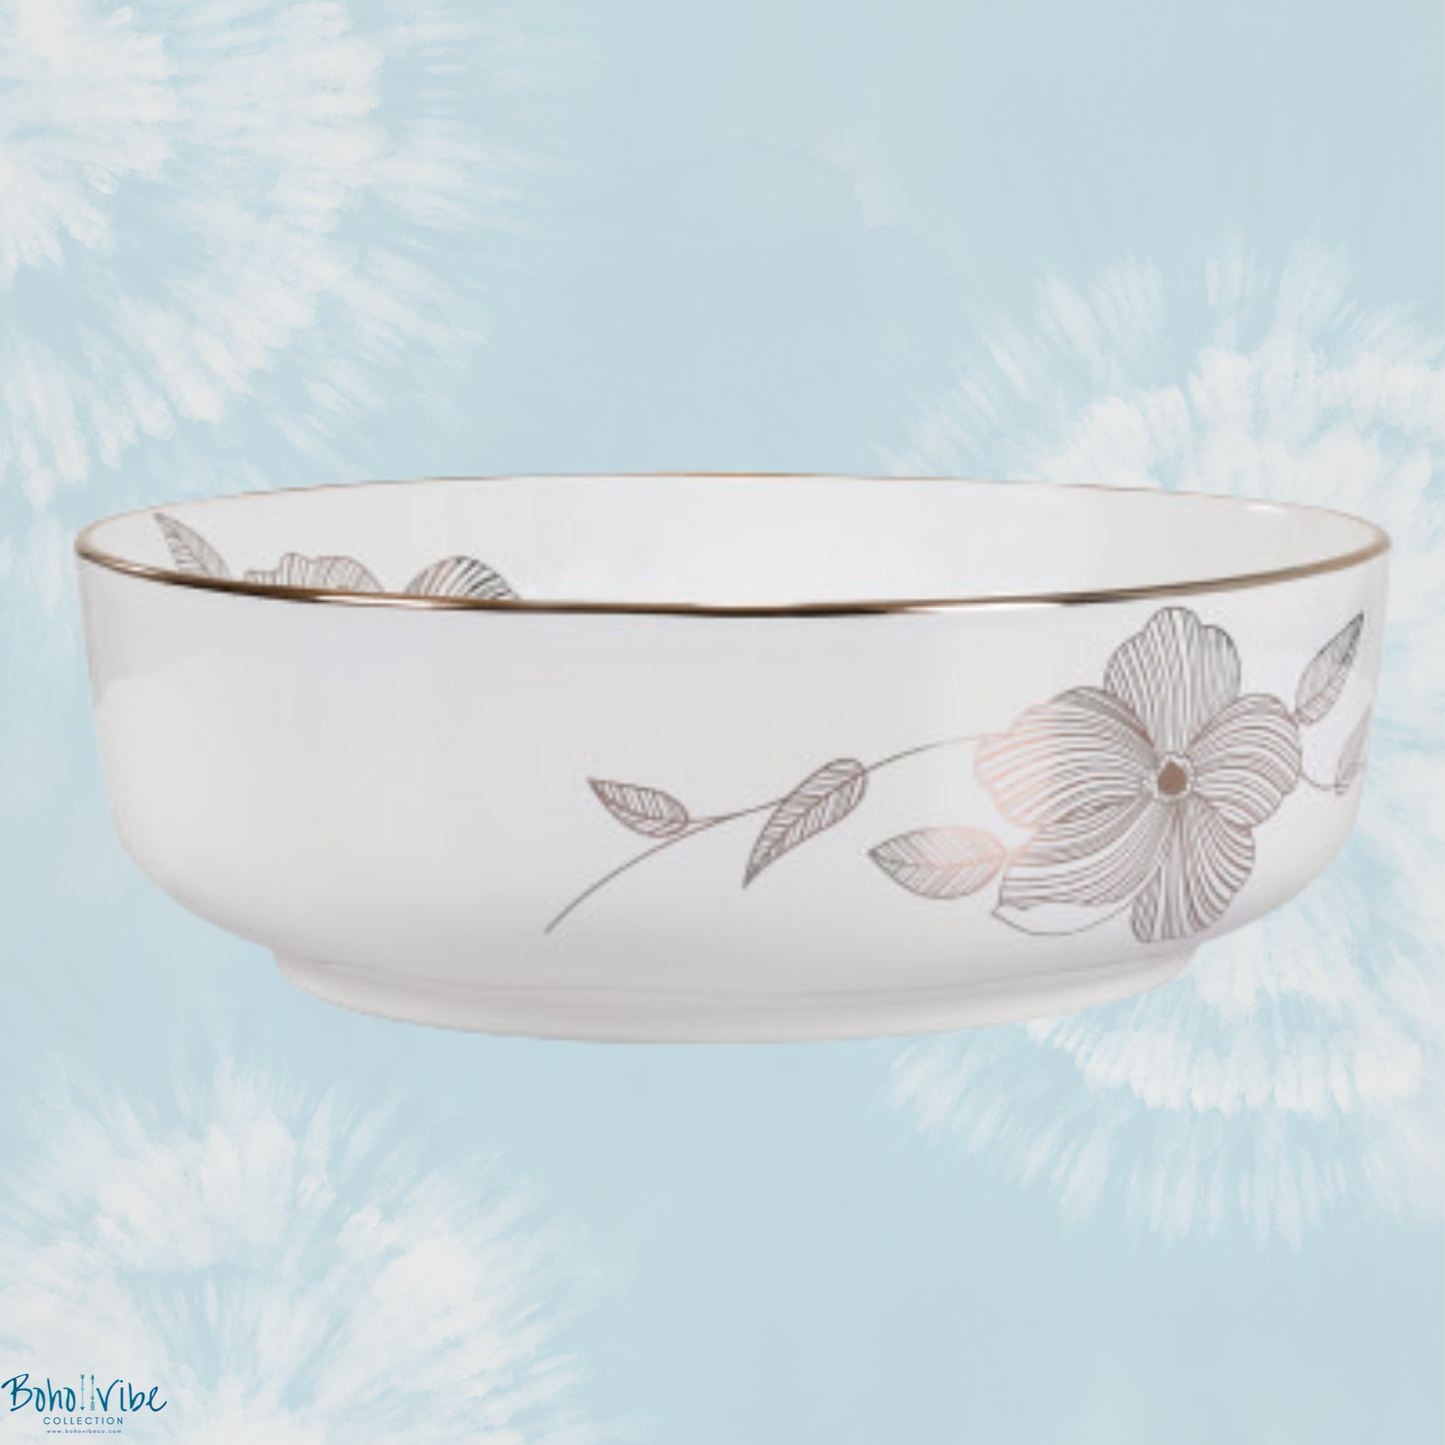 Boho ↡↟ Vibe Collection ↠ Flower Pattern Ceramic Cerfito Bathroom Sink Basin